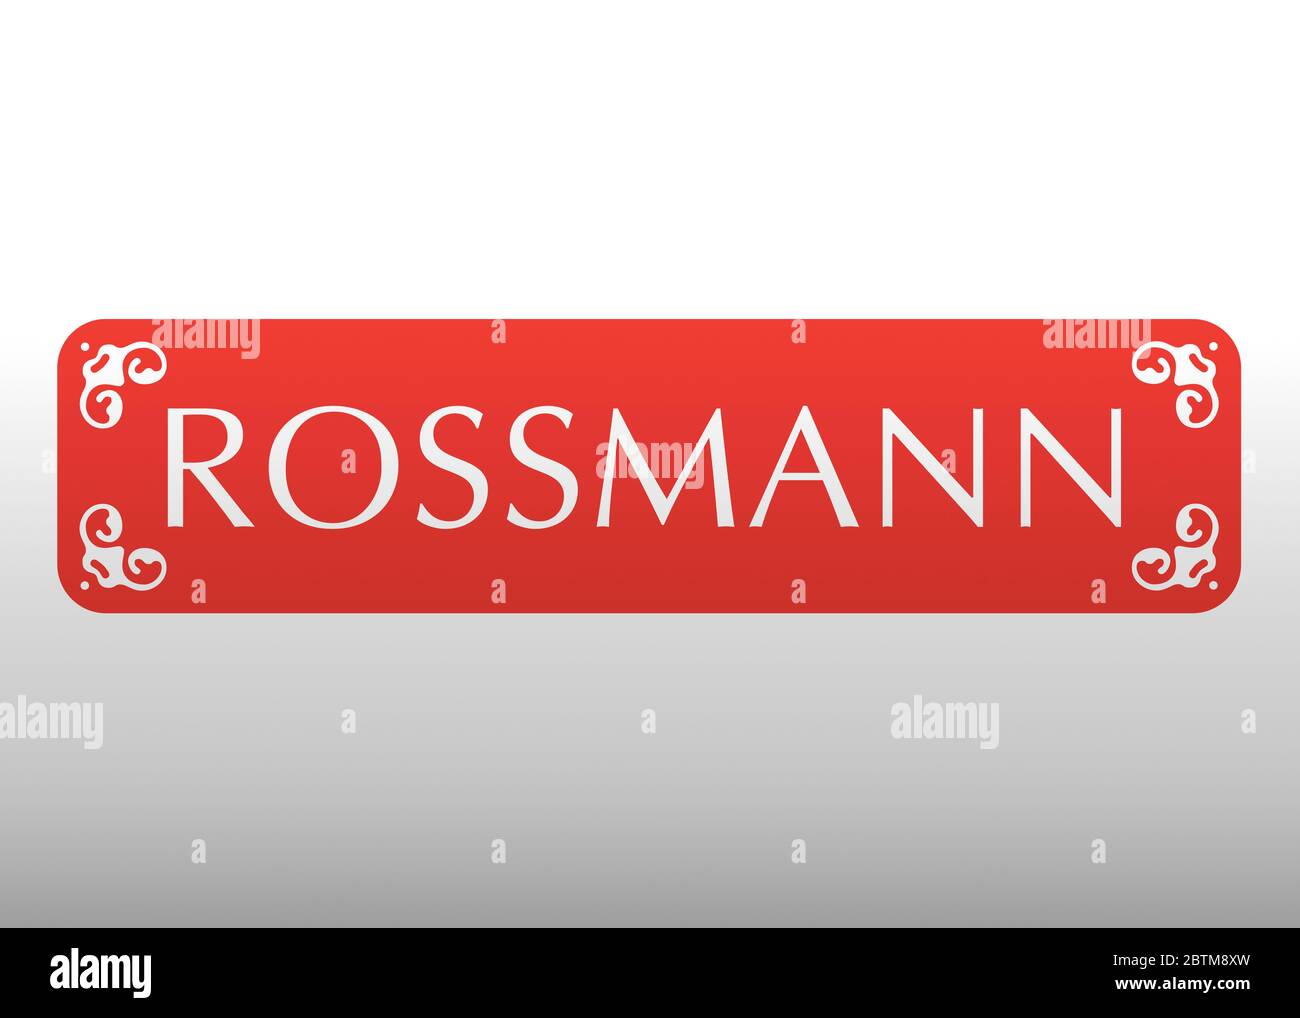 Rossmann logo - Fonts In Use